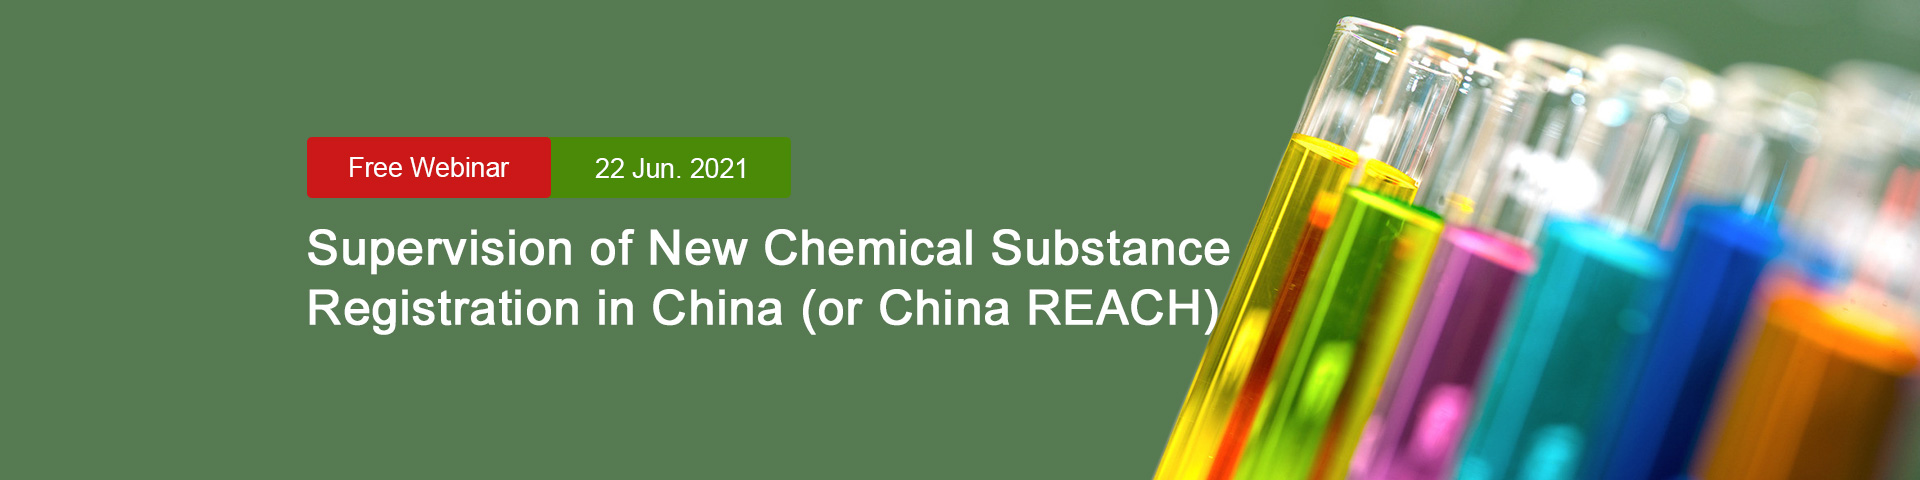 Chemical,Substance,Registration,China,New,Supervision,Webinar